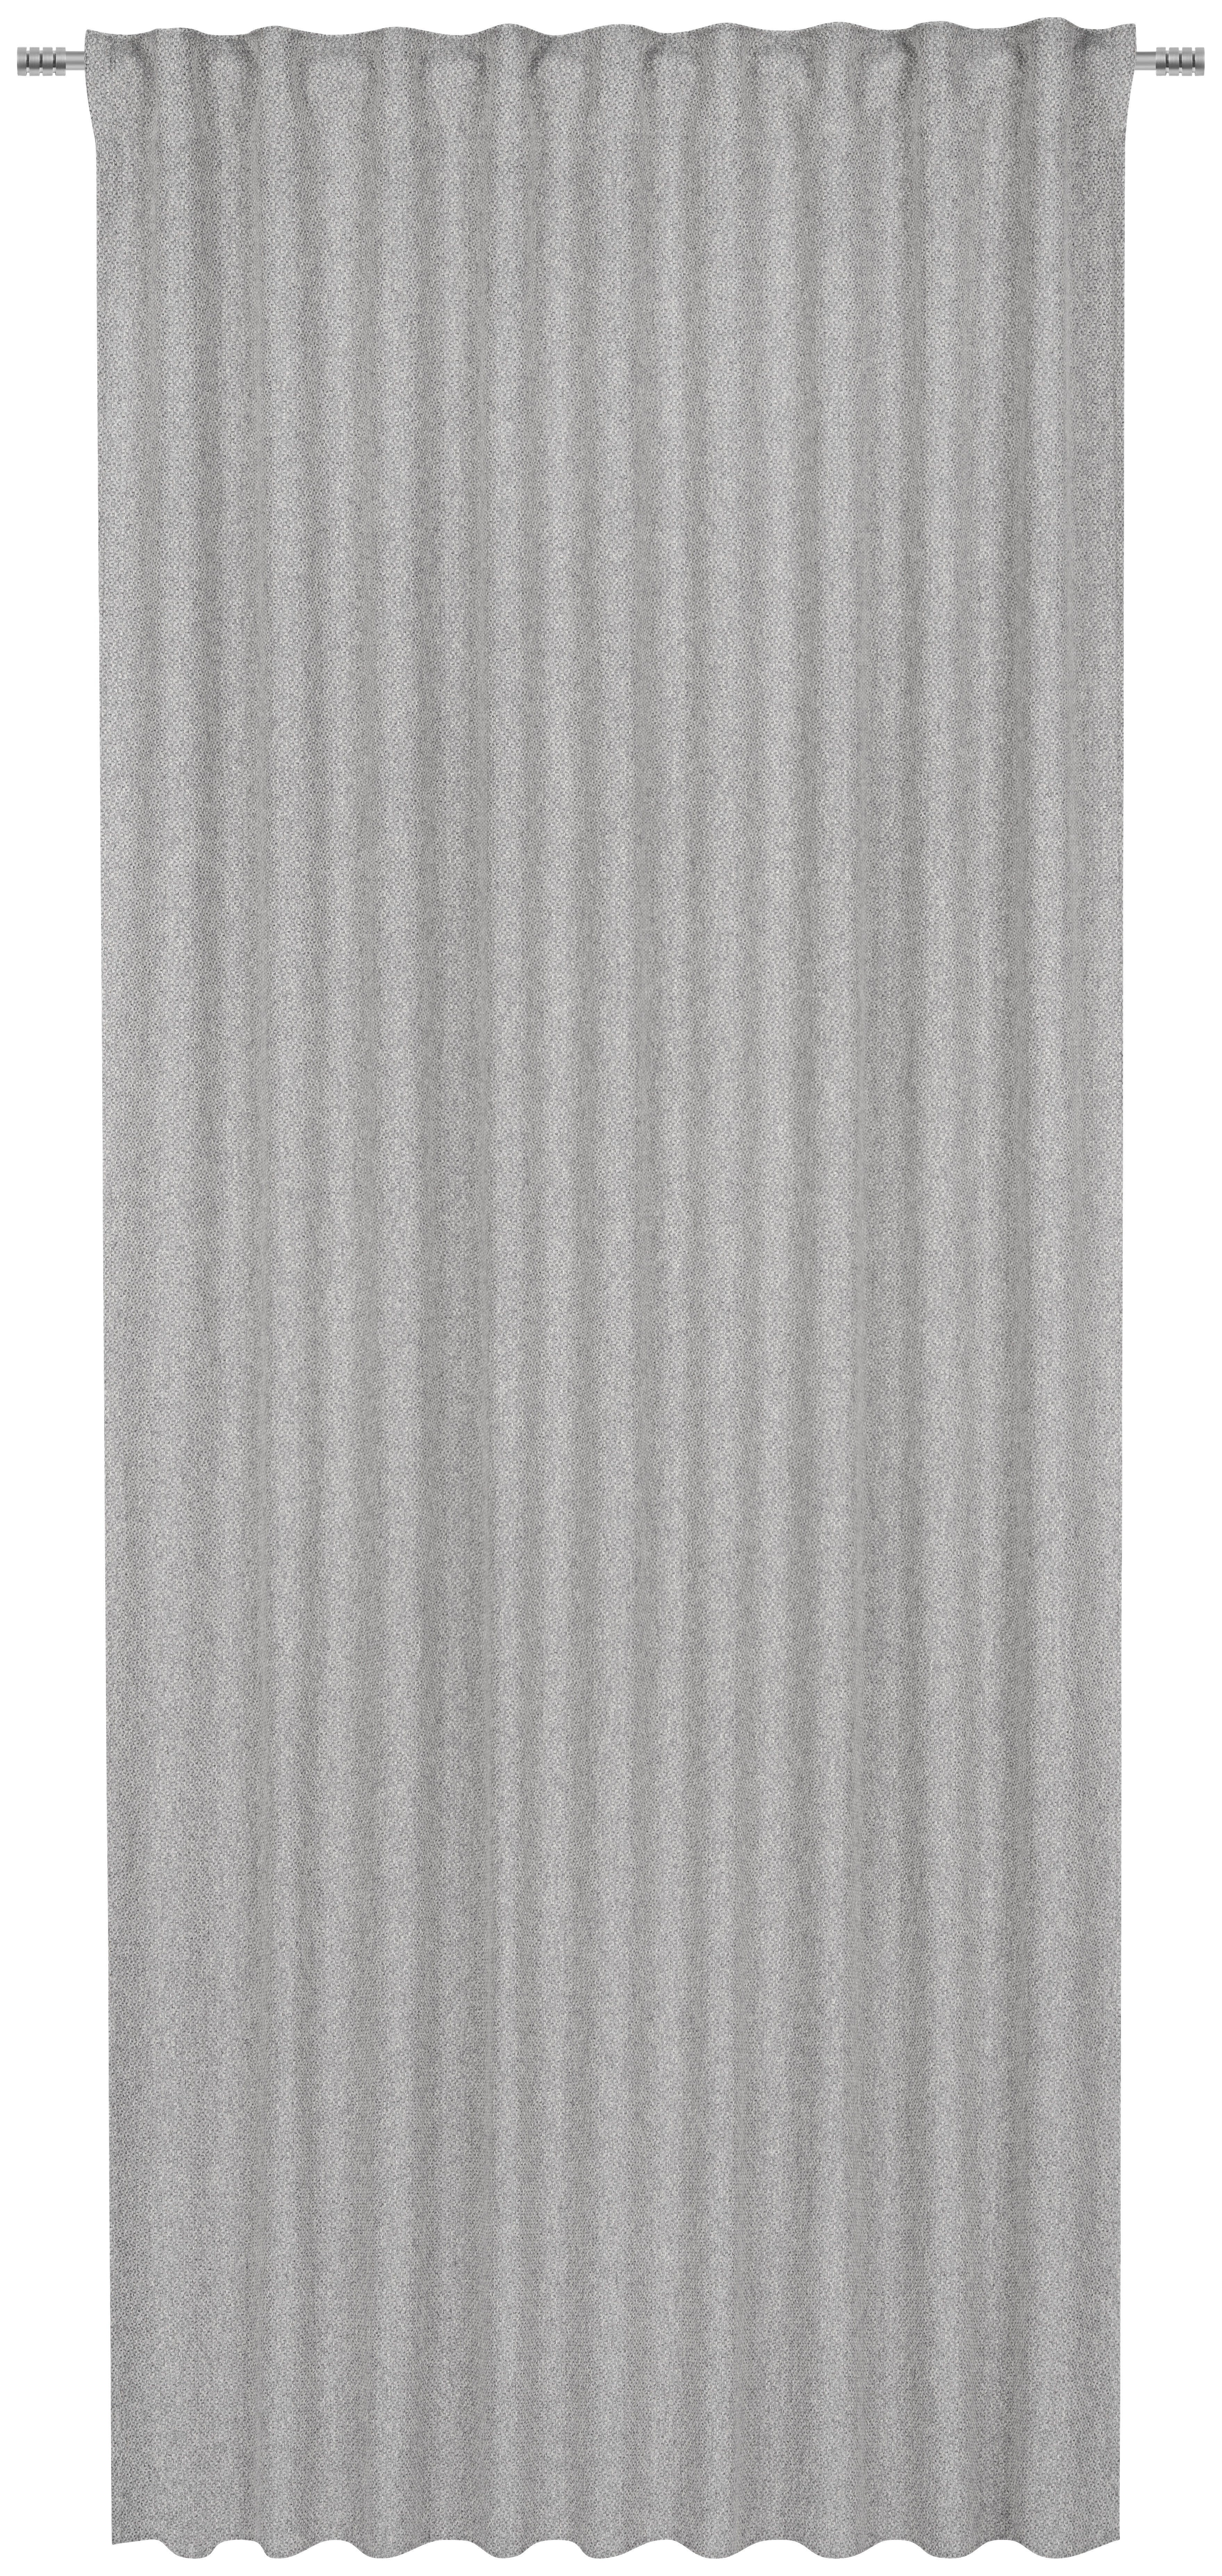 FERTIGVORHANG SAN POLO blickdicht 140/245 cm   - Grau, Basics, Textil (140/245cm) - Esposa